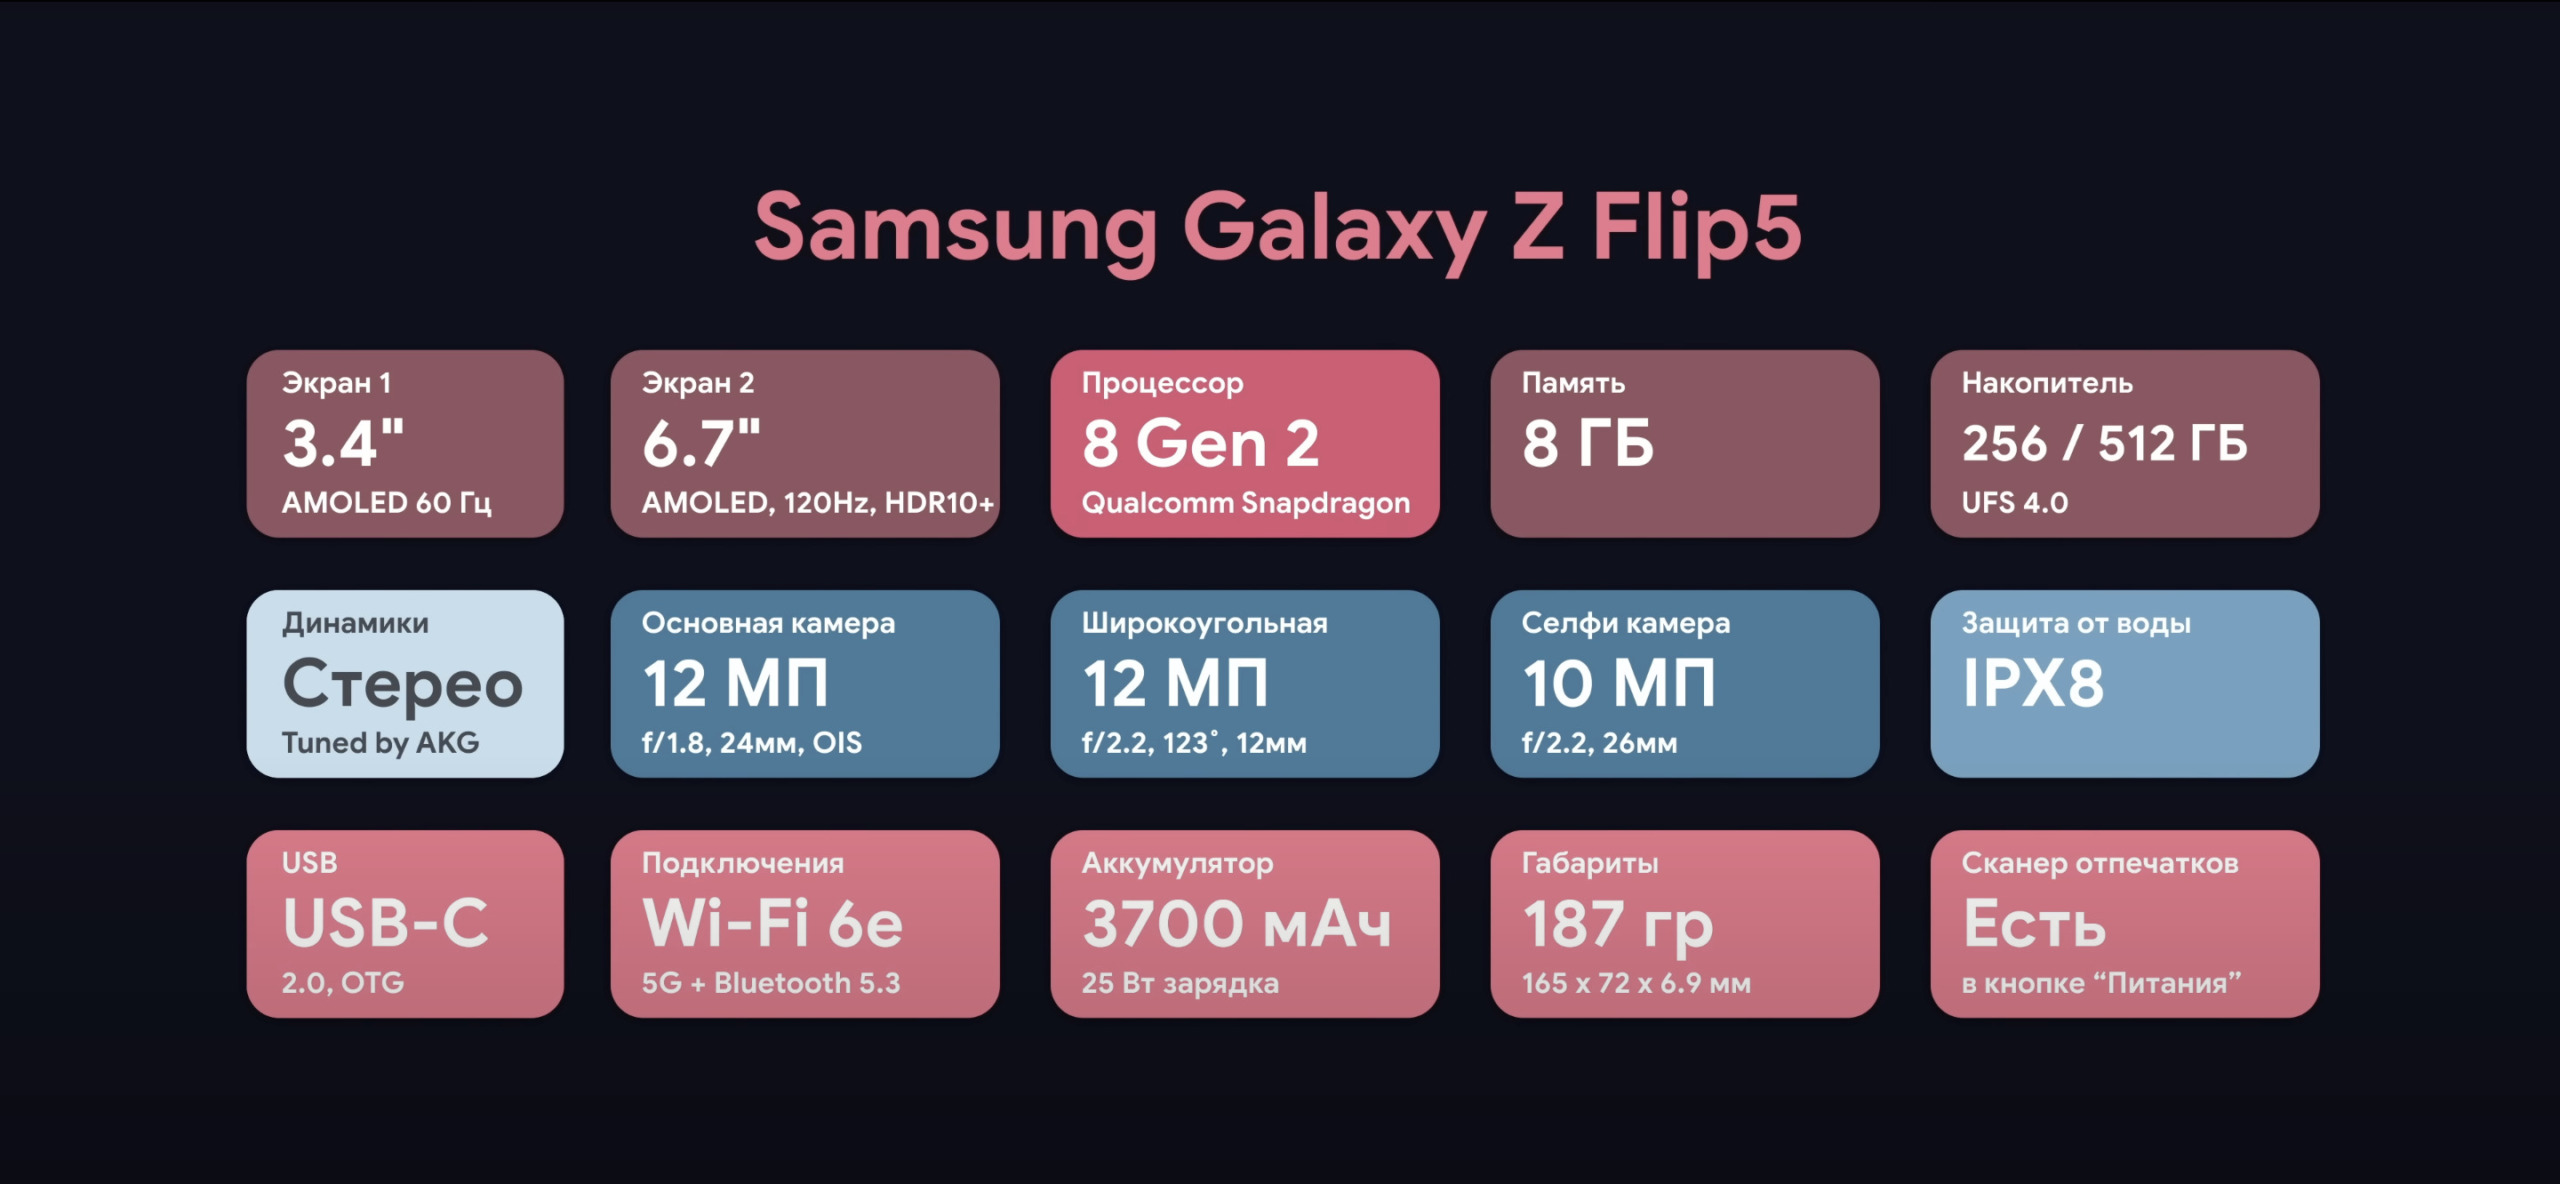 Samsung Galaxy Z Flip 5 specs